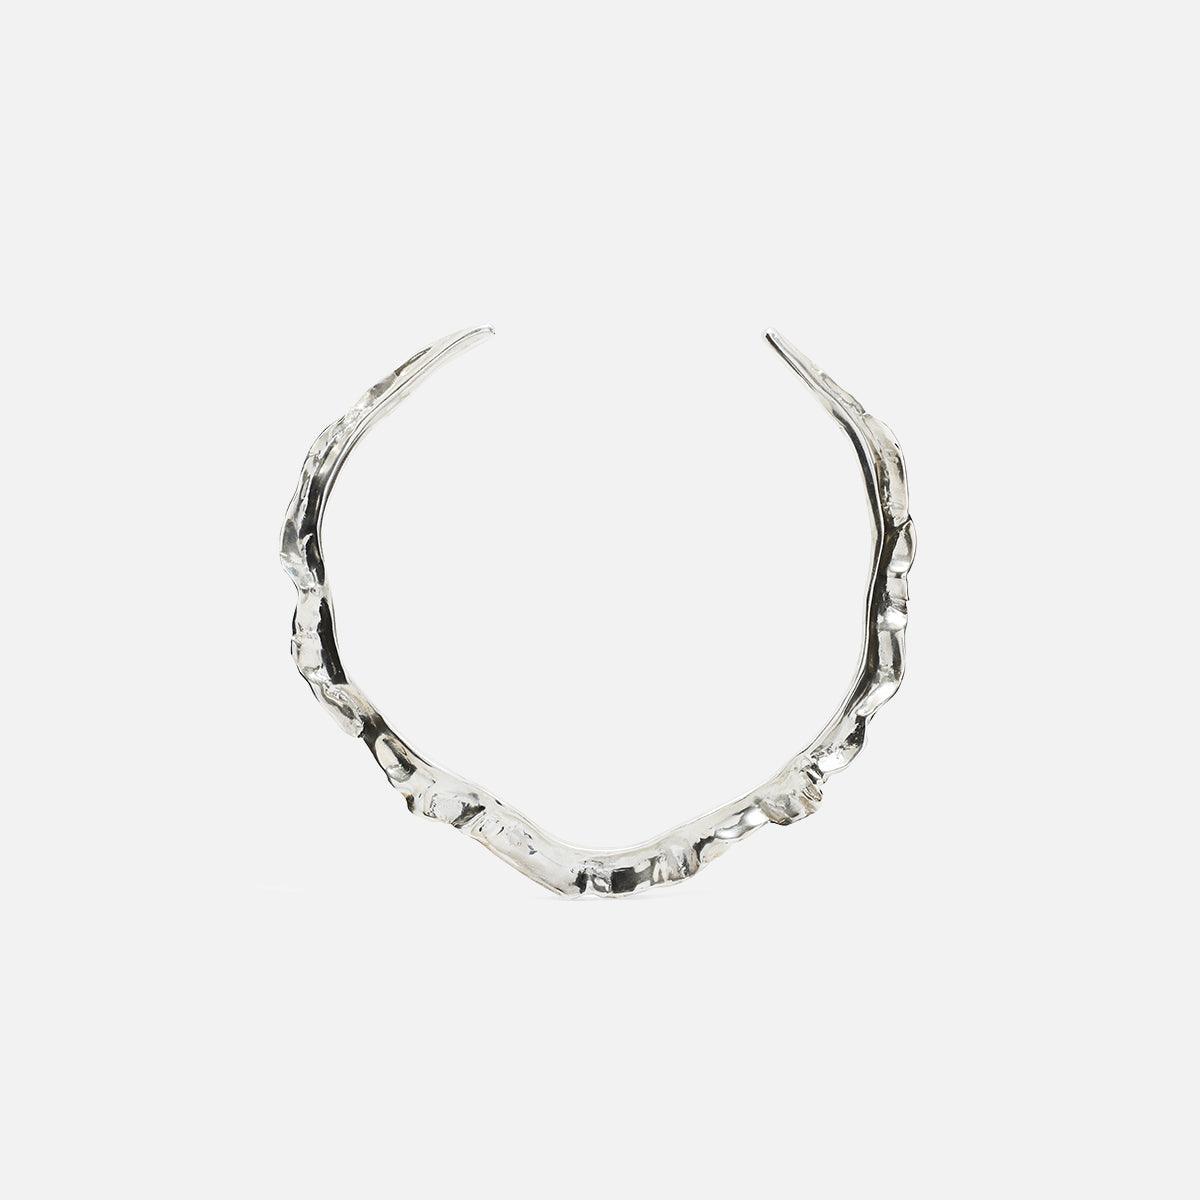 Ariana Boussard-Reifel Manus Collar Necklace - At Present Jewelry